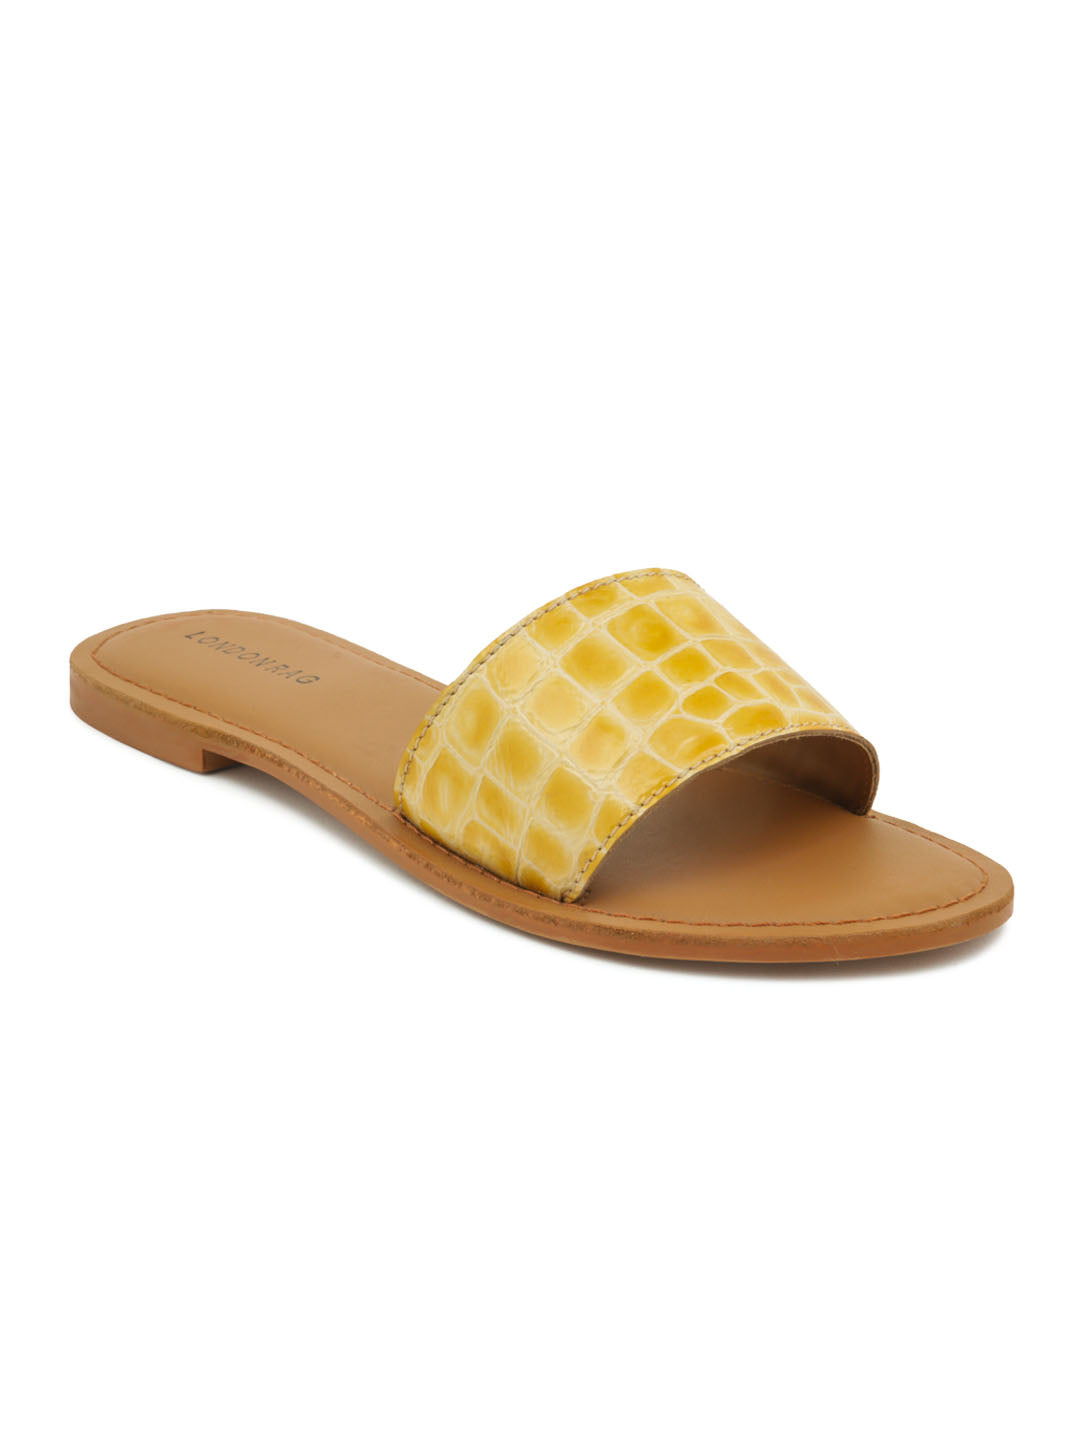 Mustard Croc Print Slip-On Sandal - Yellow